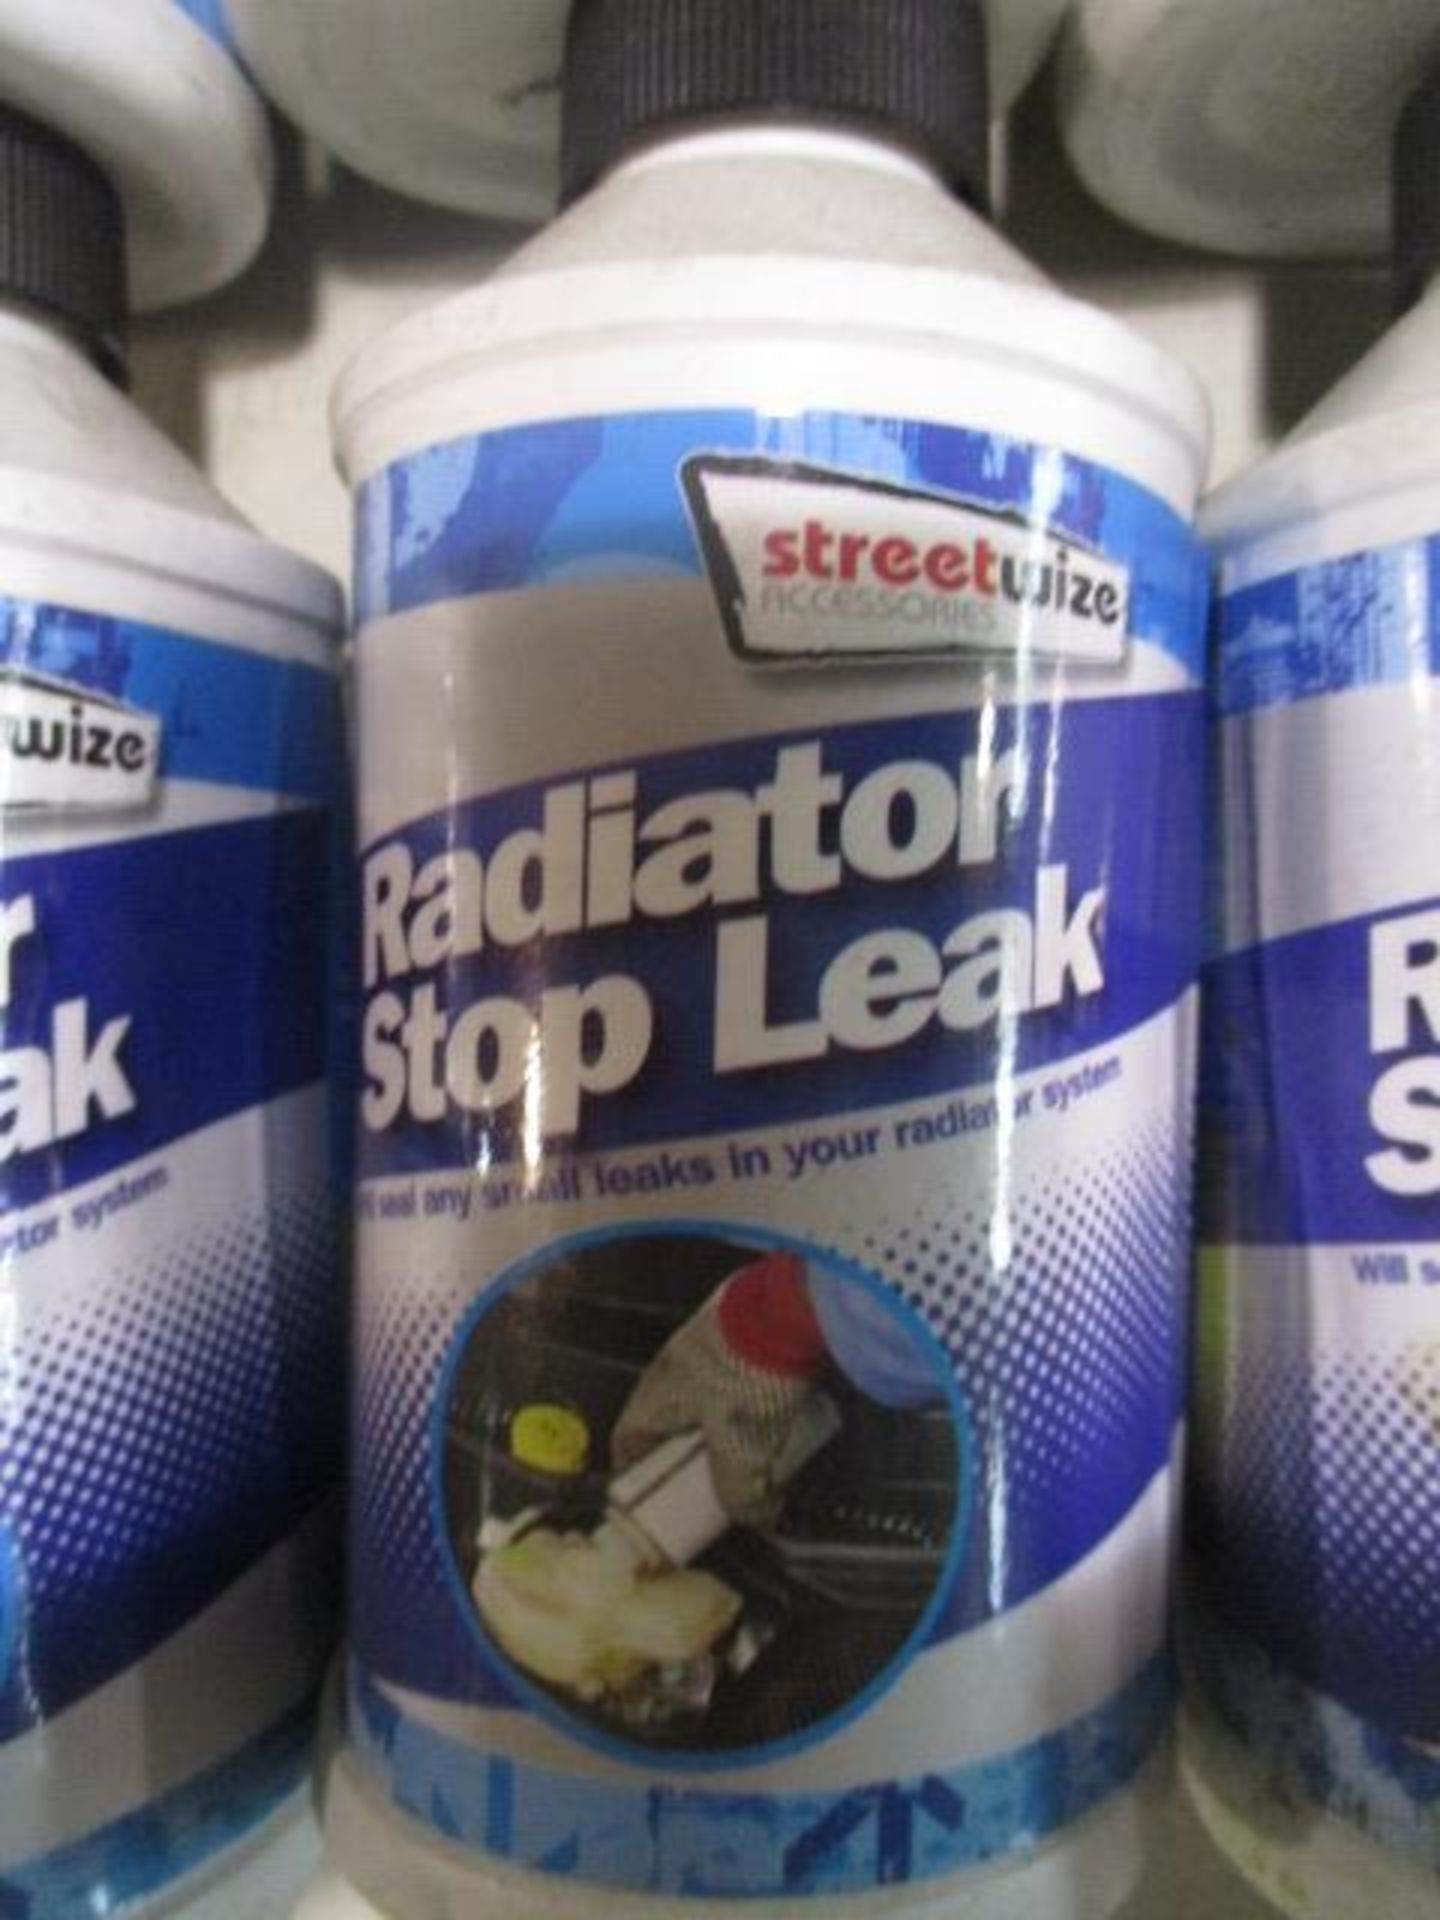 12pcs unused unopened sealed units of Streetwize radiator stop leak - rrp £4.99 - each bottle